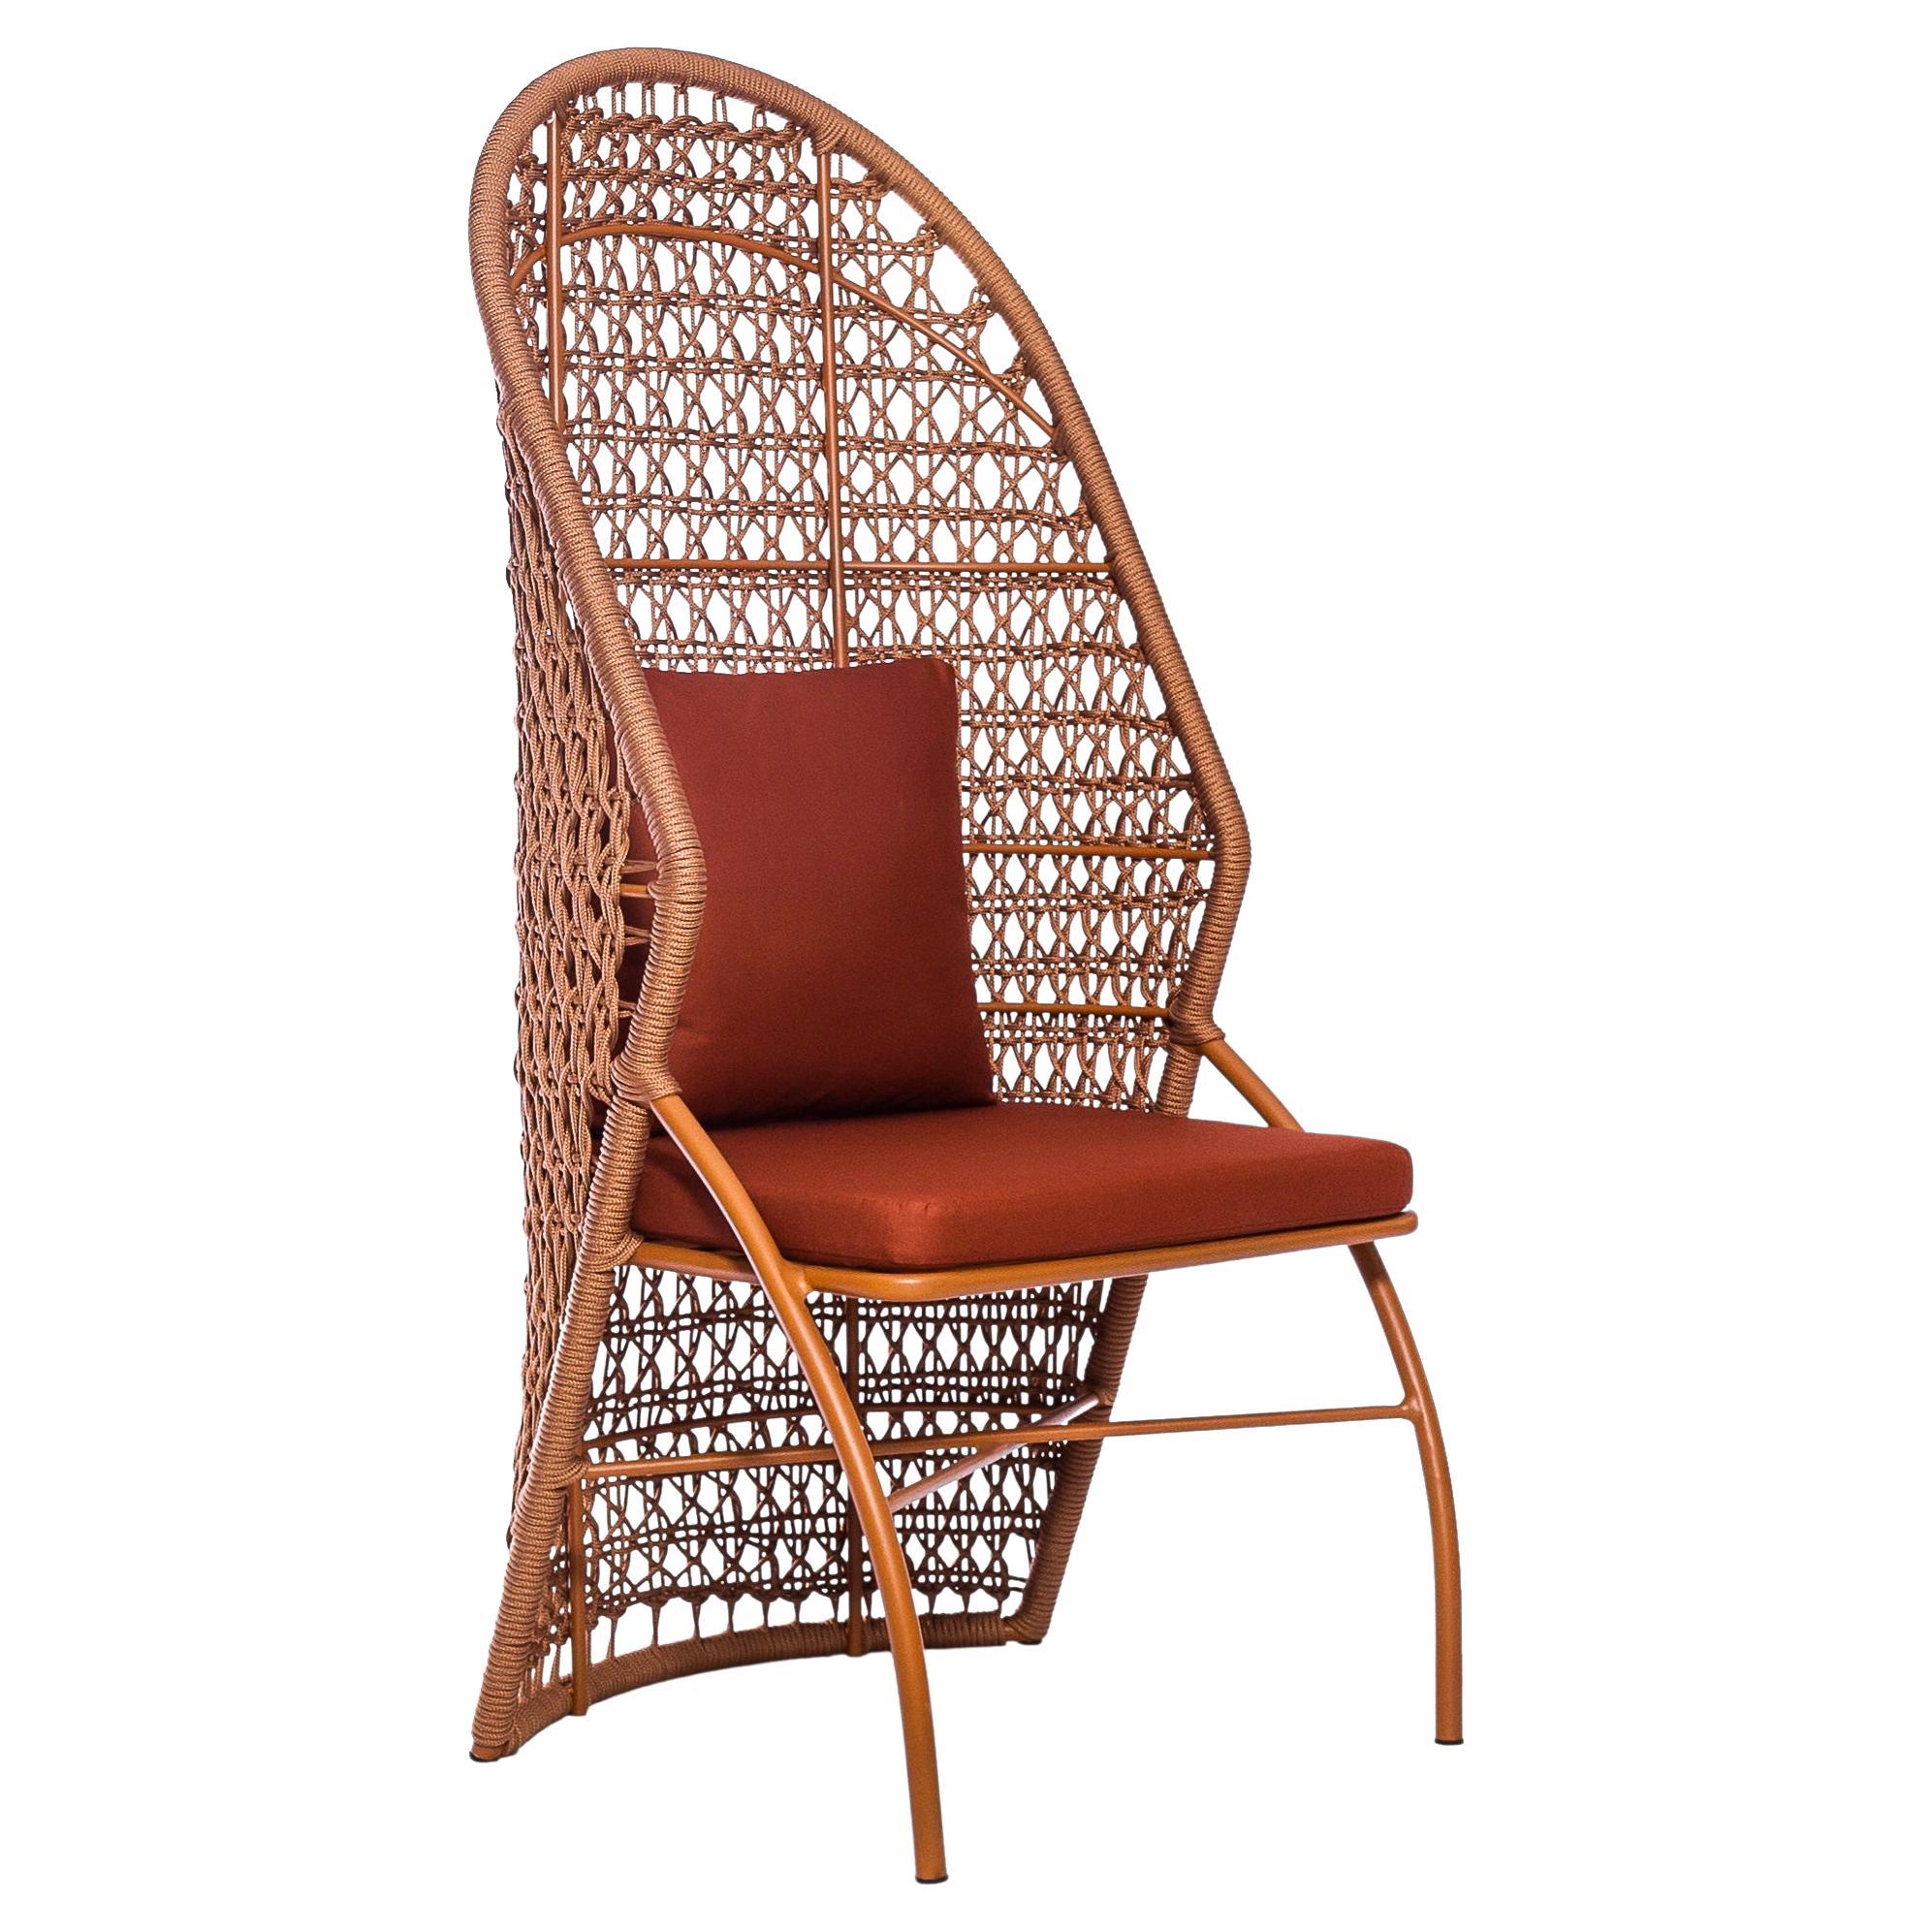 „Belize“ Outdoor-Stuhl aus Aluminium und marineblauem Seil, handgefertigt